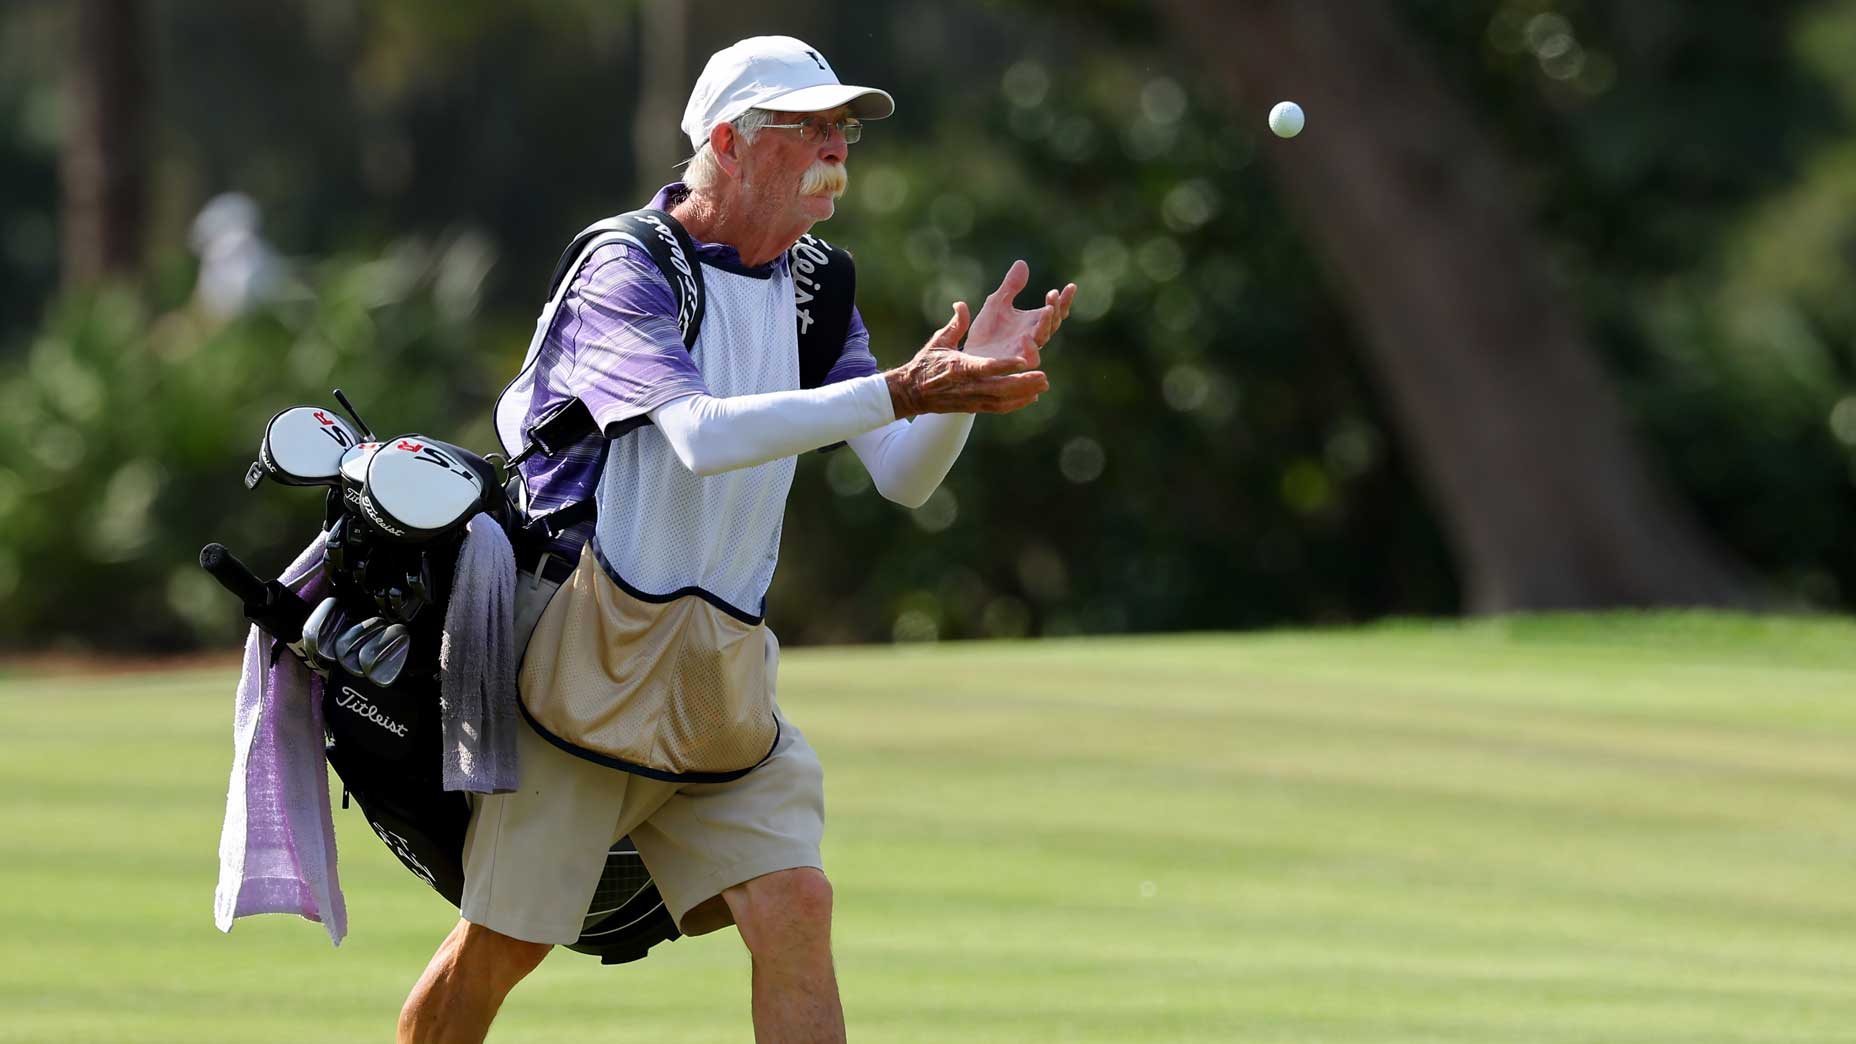 Mike "Fluff" Cowan catches a golf ball while carrying a golf bag.